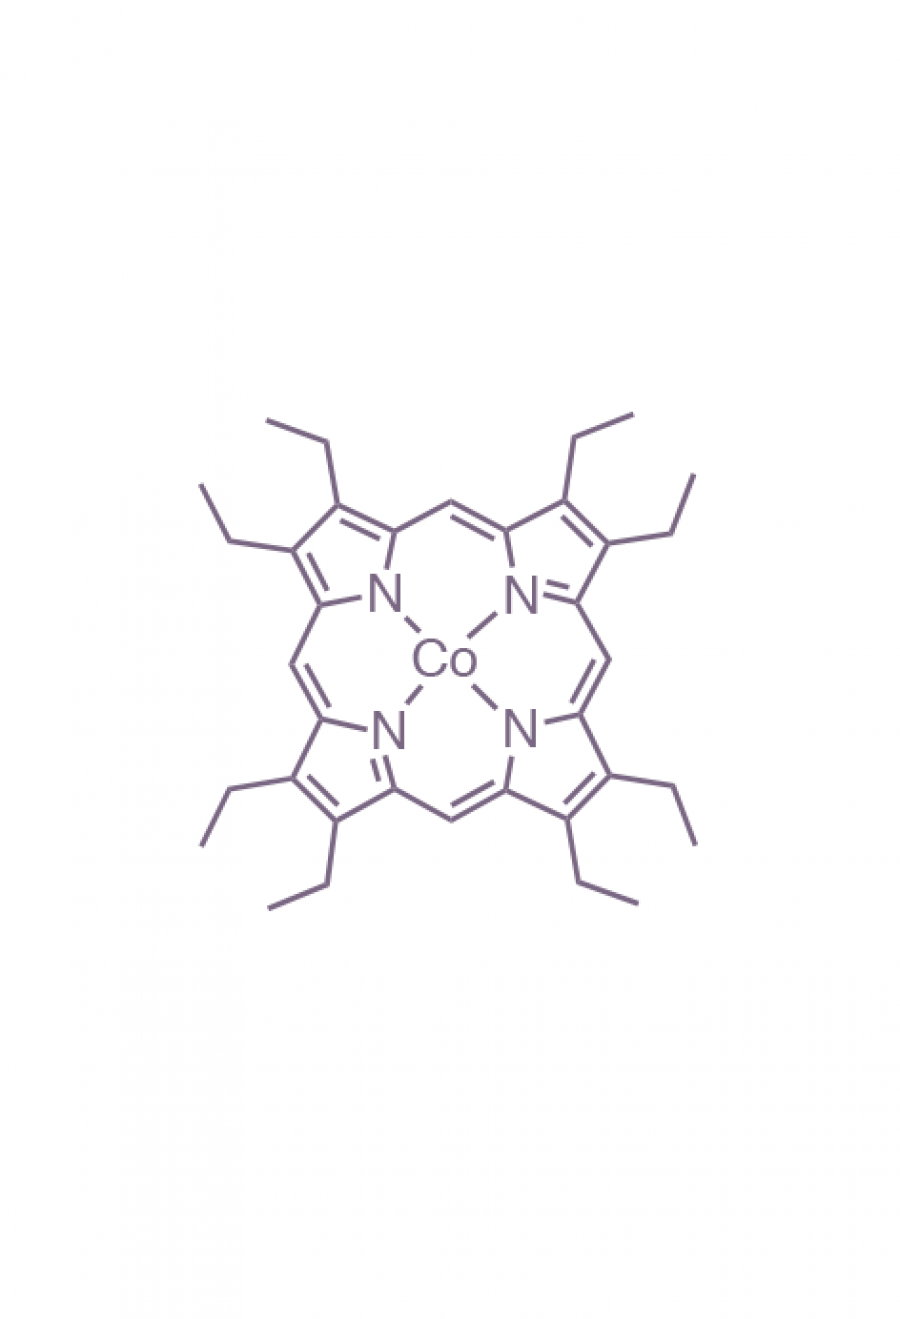 cobalt(II) 2,3,7,8,12,13,17,18-(octaethyl)porphyrin  | Porphychem Expert porphyrin synthesis for research & industry